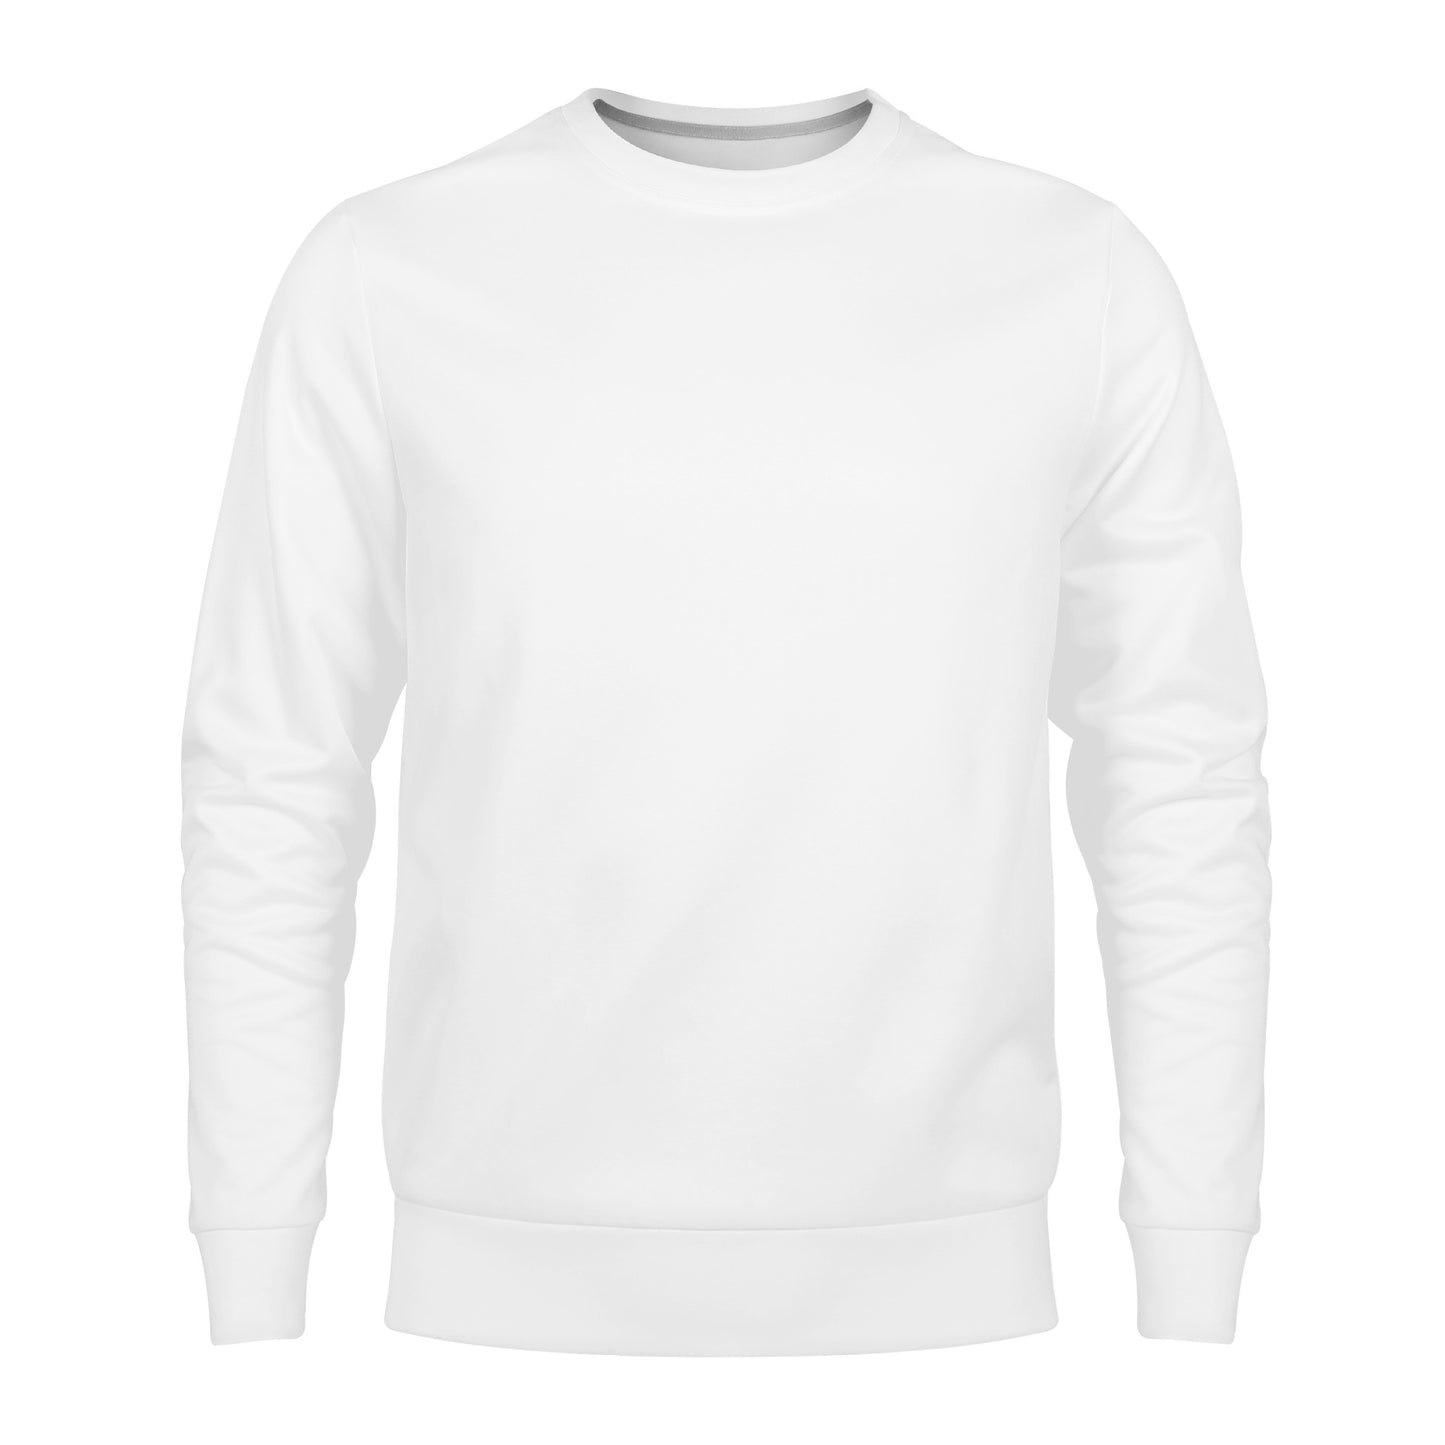 Create Your Own - All Over Print Custom Sweatshirt - HayGoodies